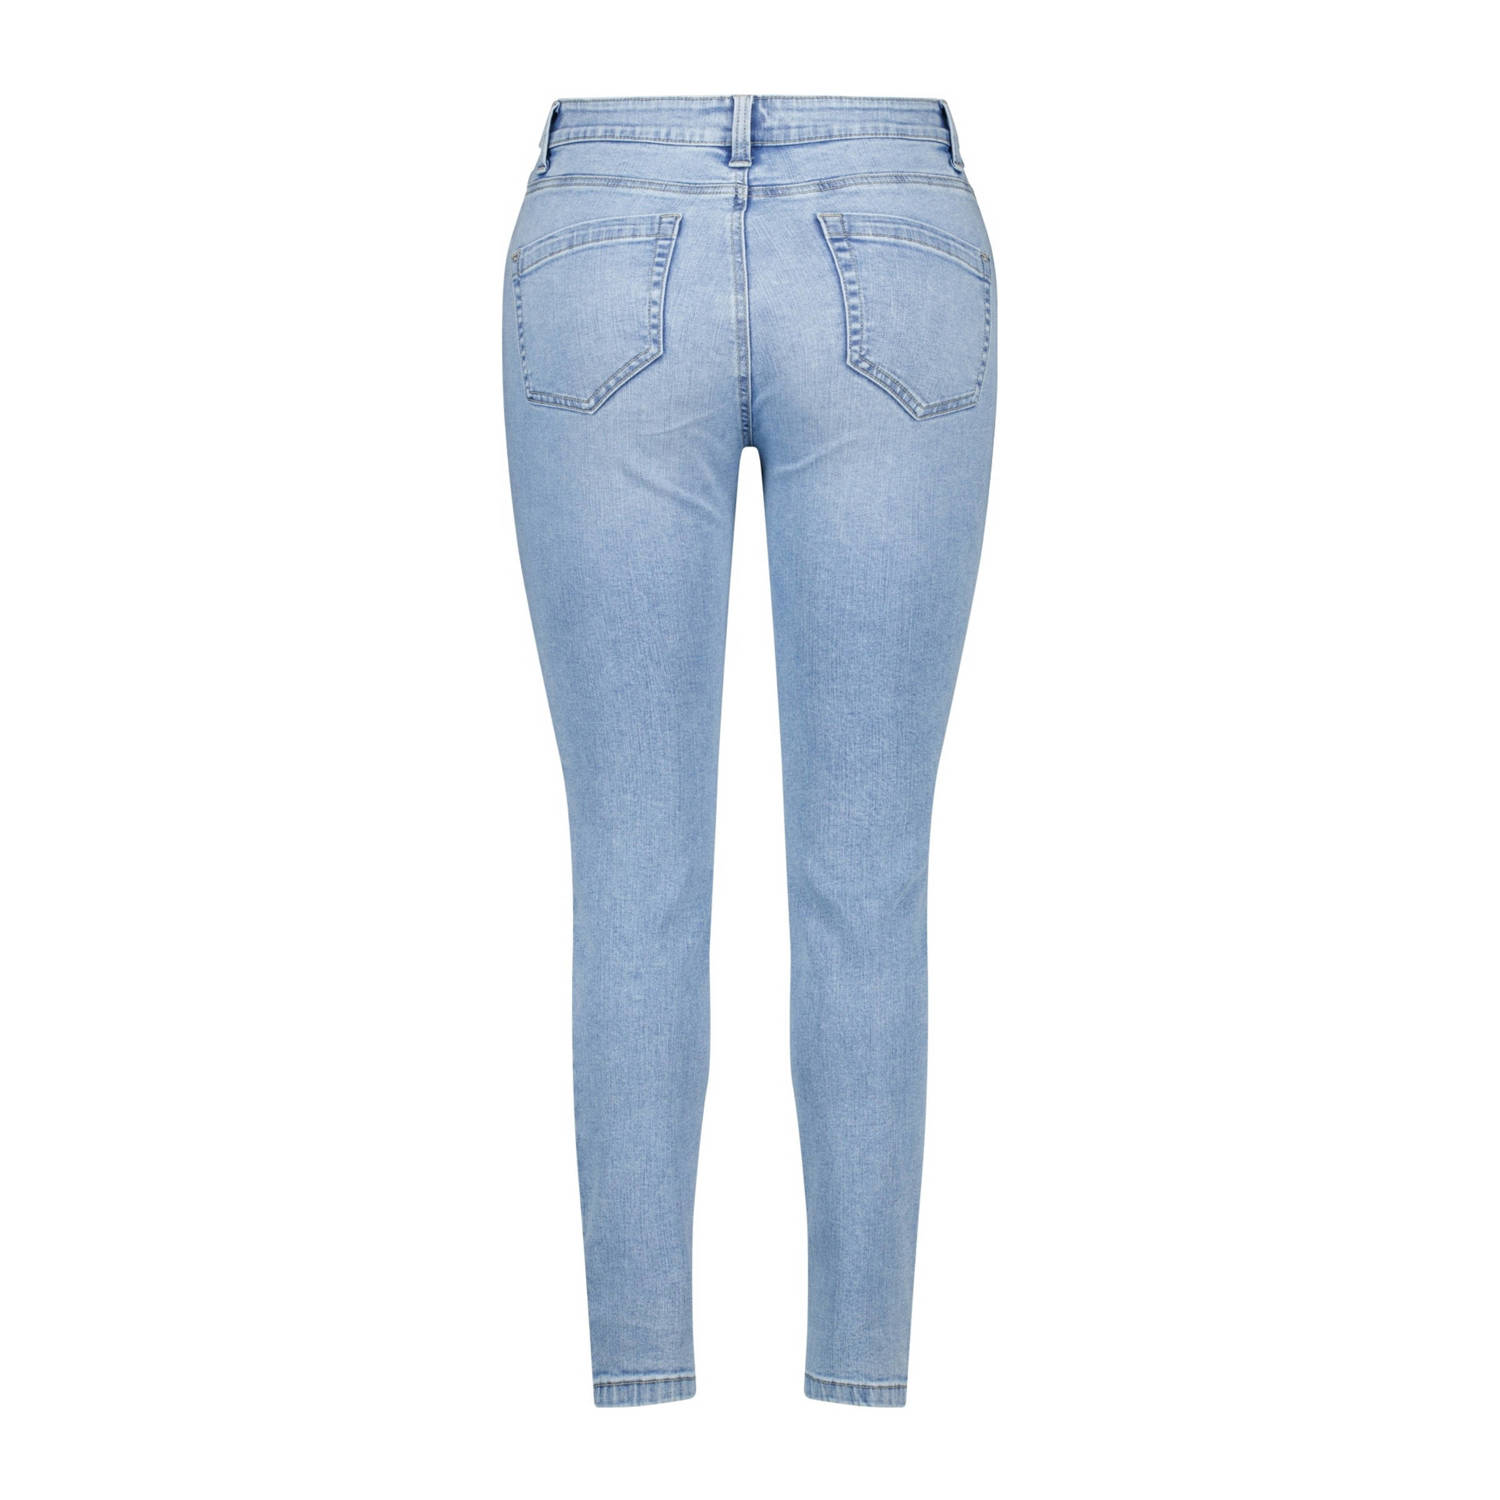 MS Mode high waist slim fit jeans light blue denim